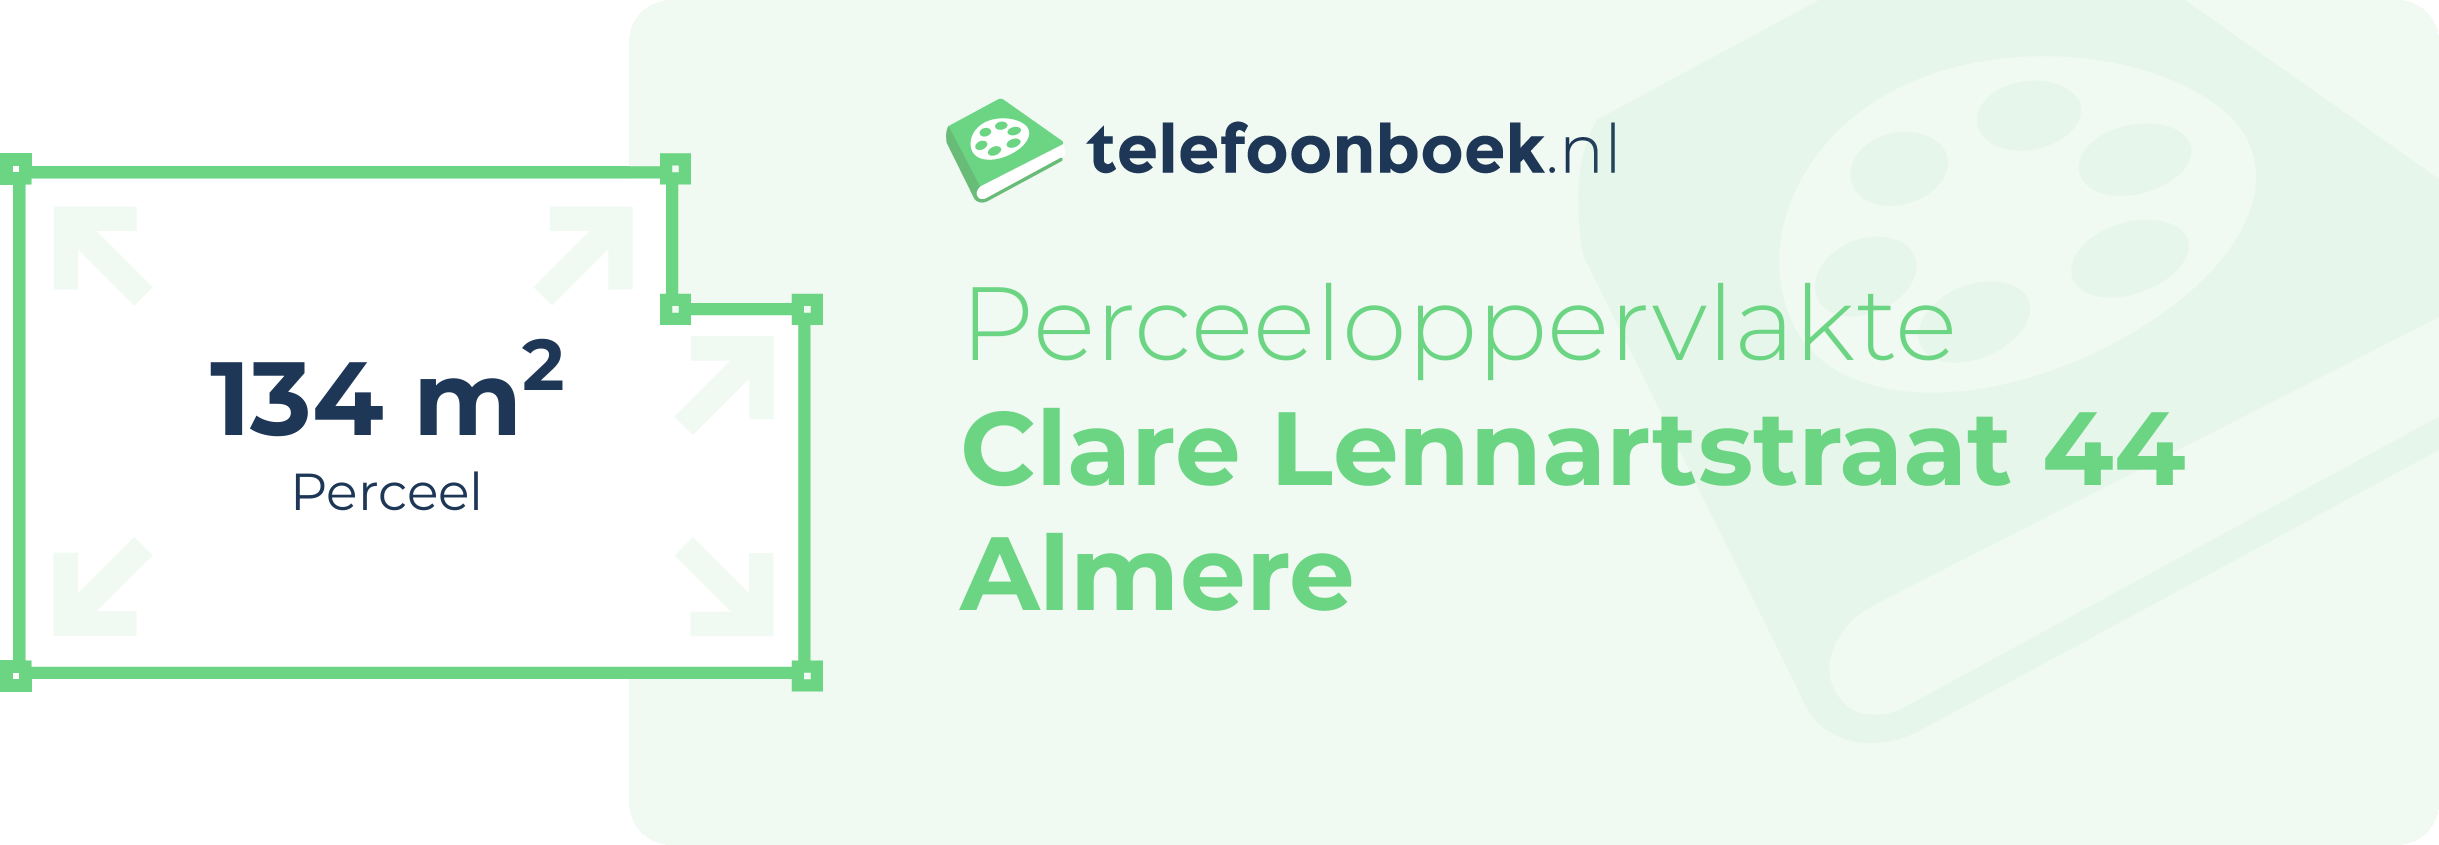 Perceeloppervlakte Clare Lennartstraat 44 Almere